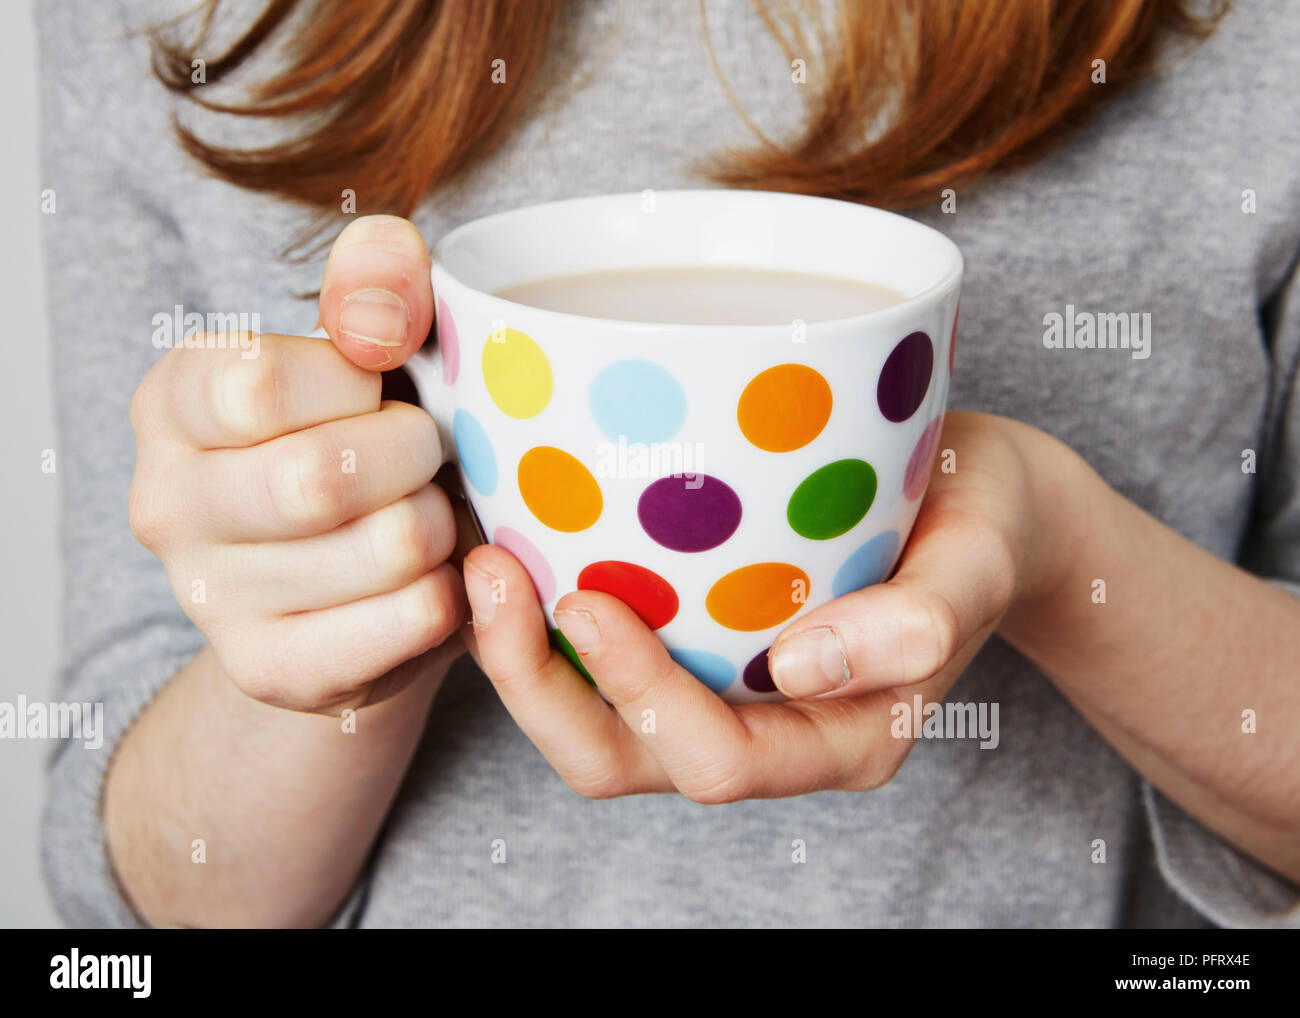 Bambino di bere una bevanda calda da un macchie mug Foto Stock